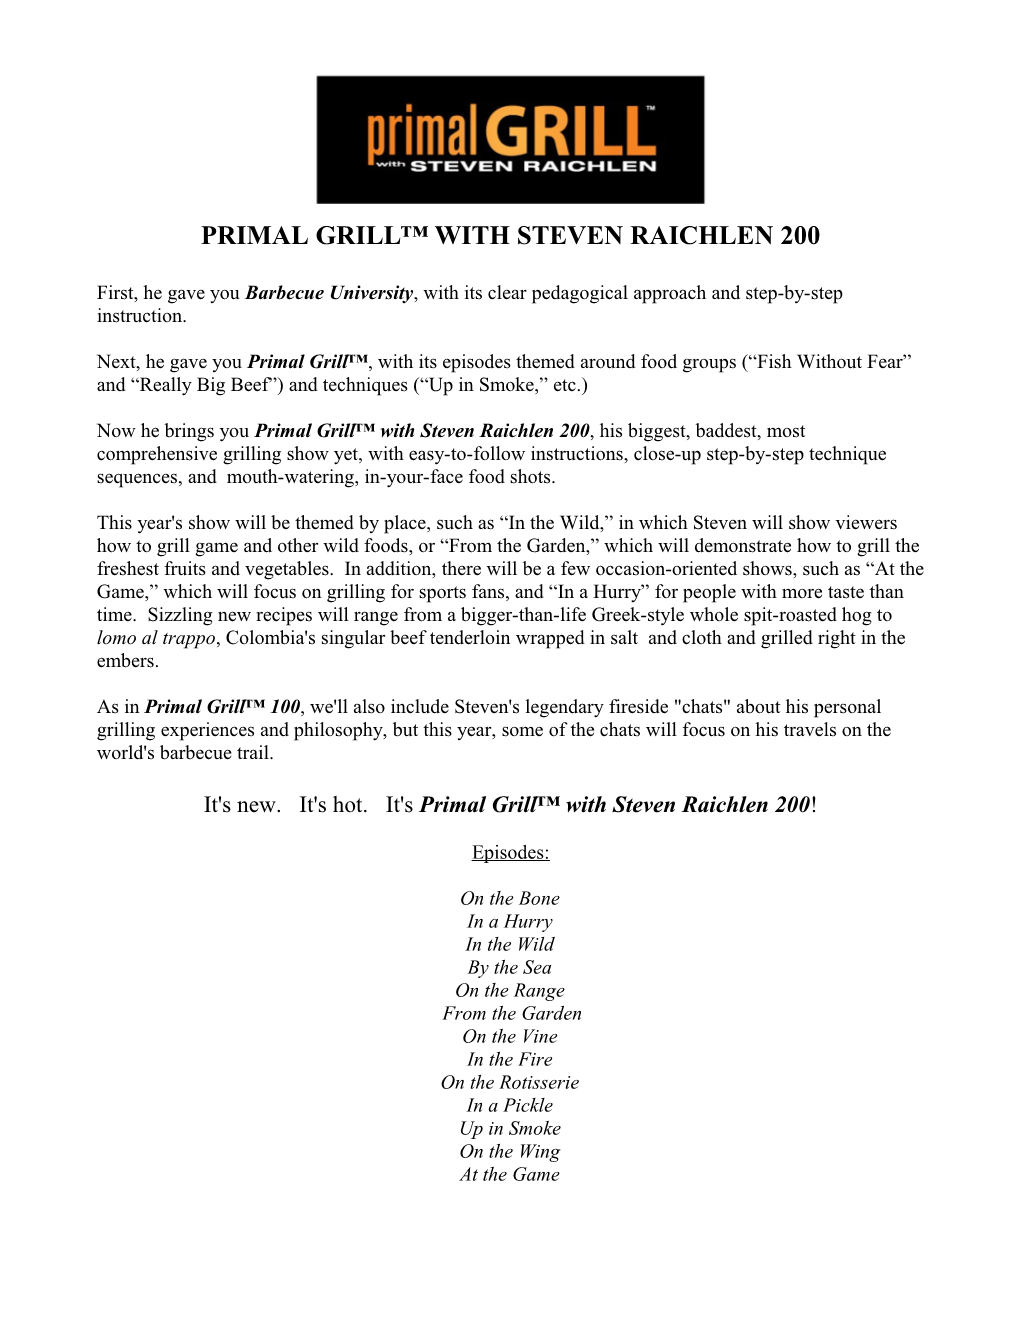 Primal Grill with Steven Raichlen 200